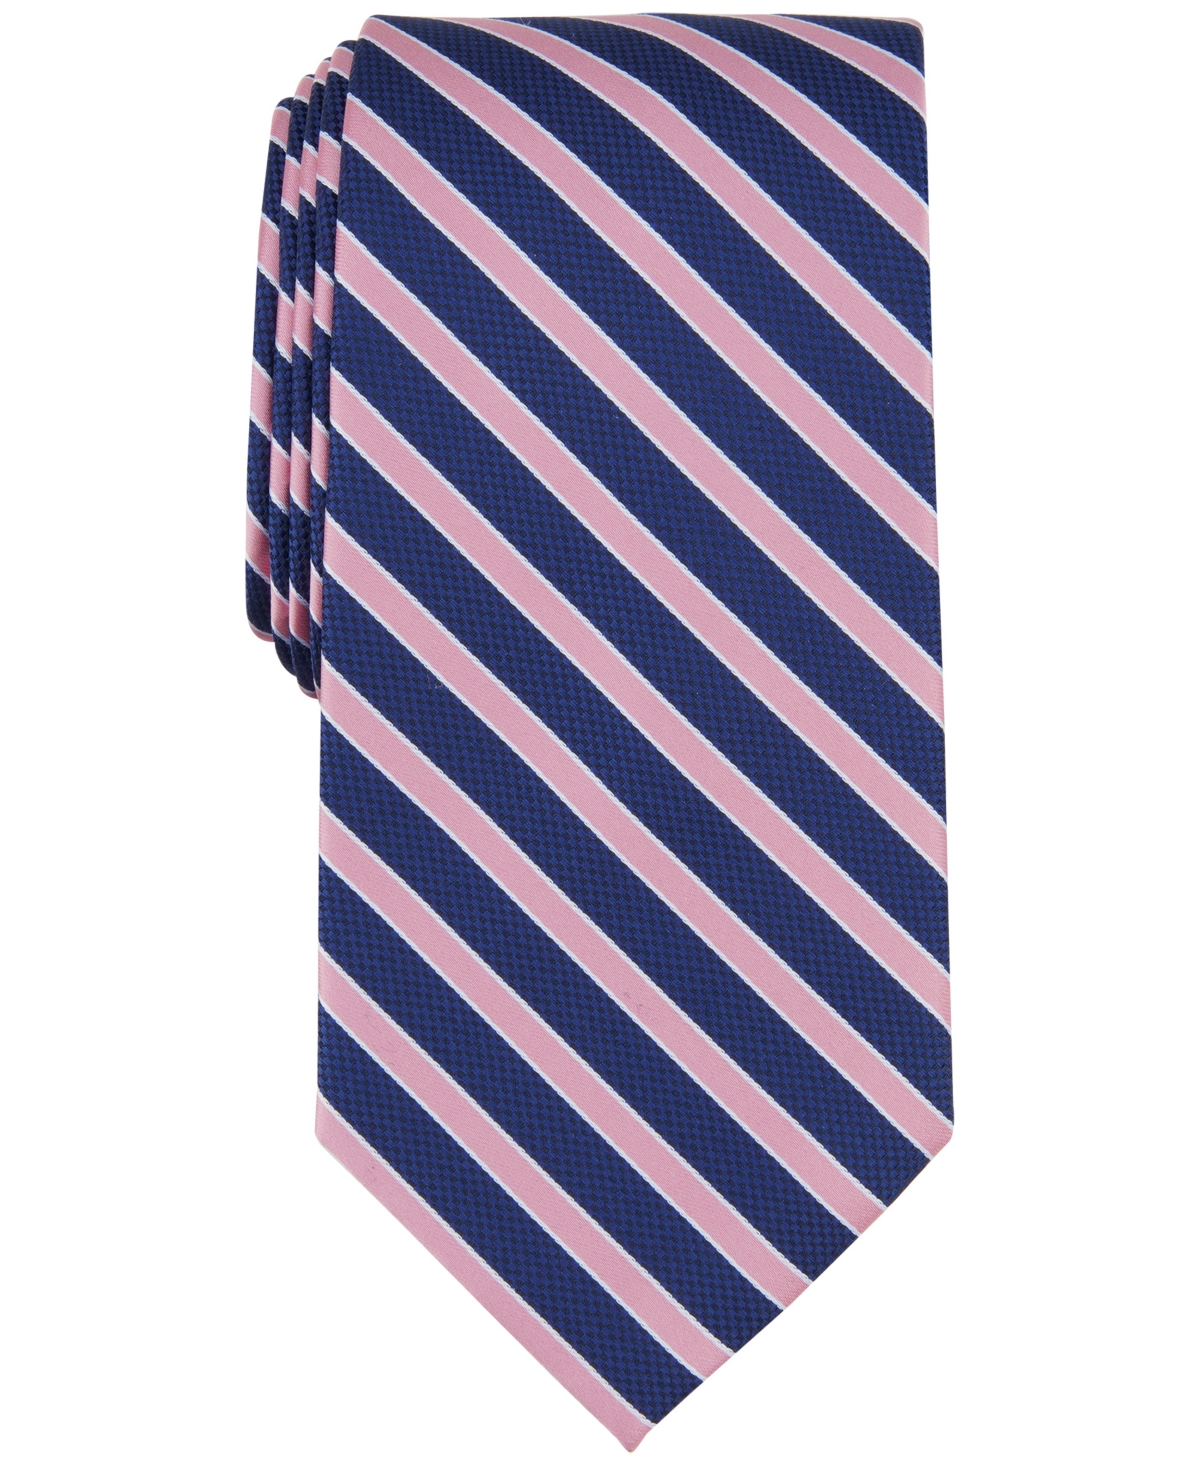 Men's Willard Stripe Tie, Created for Macy's - Pink